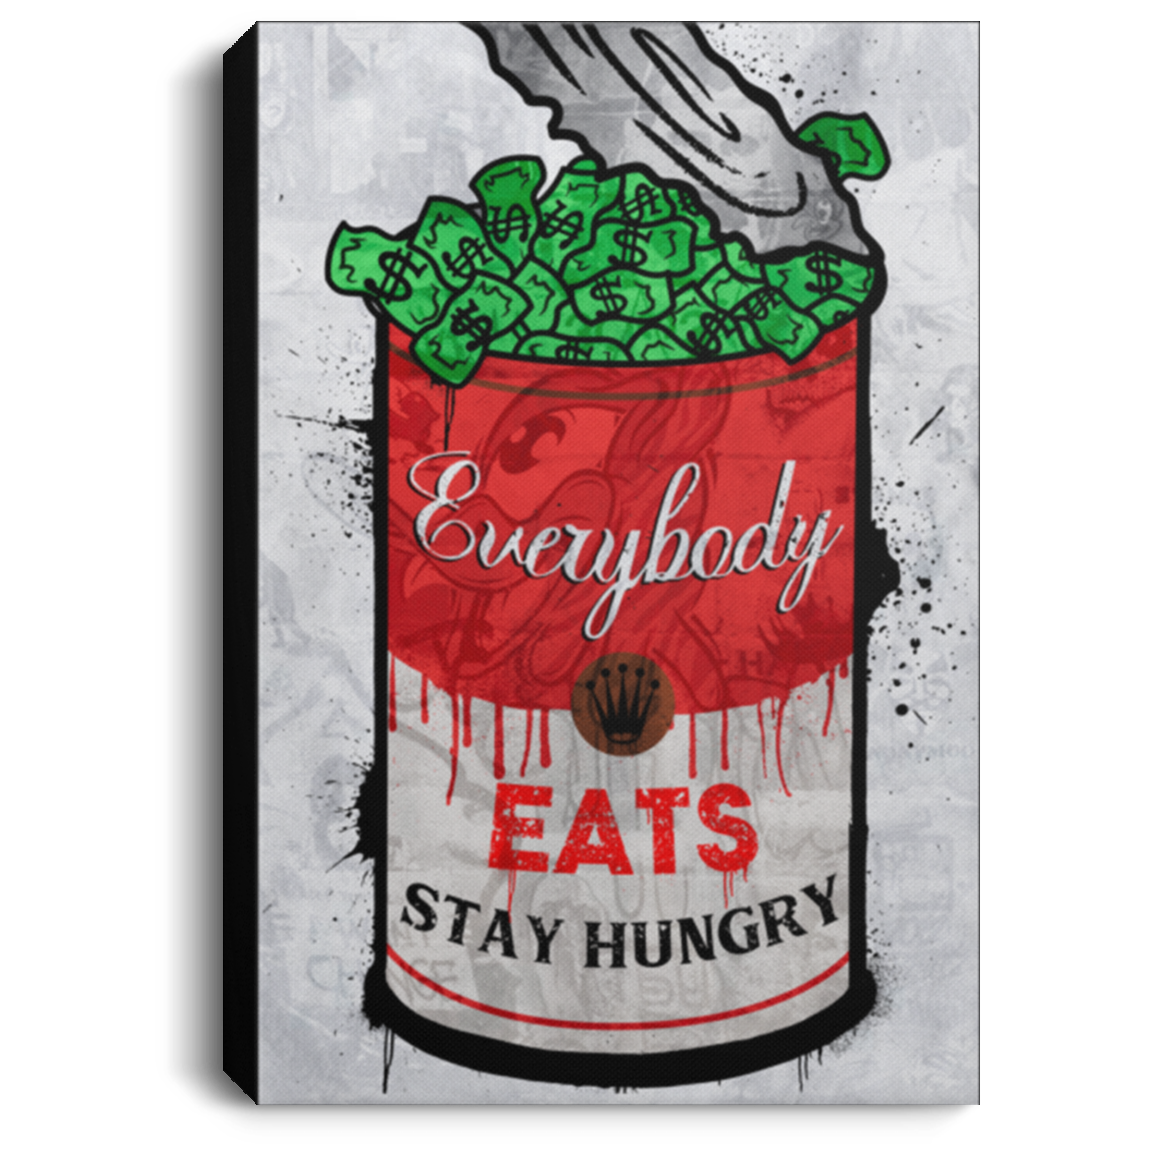 Everybody Eats